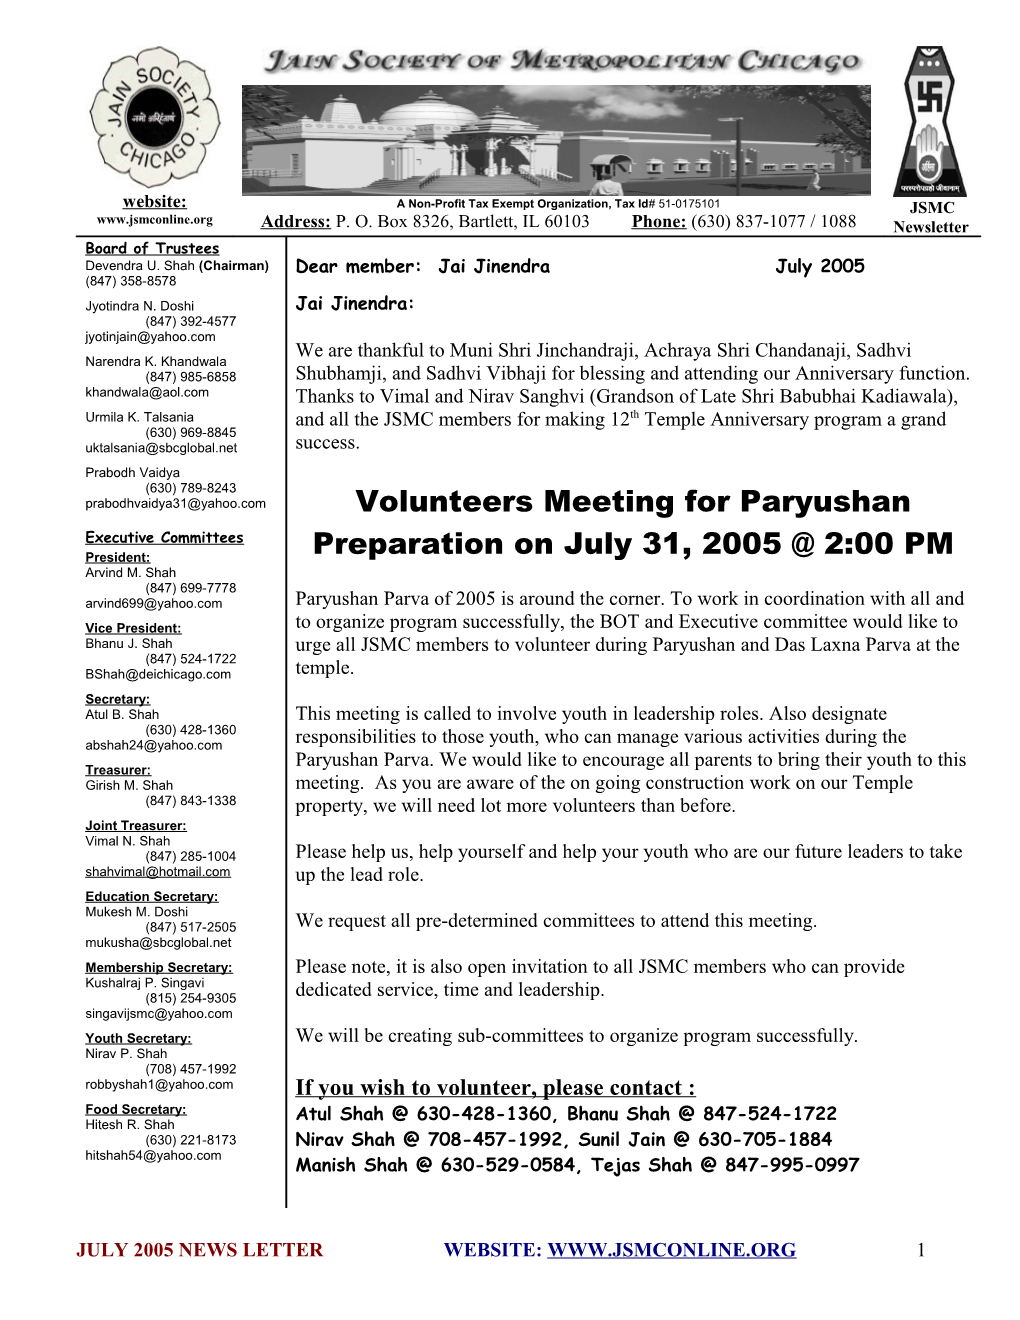 Detailed Program of Paryushan Maha Parva